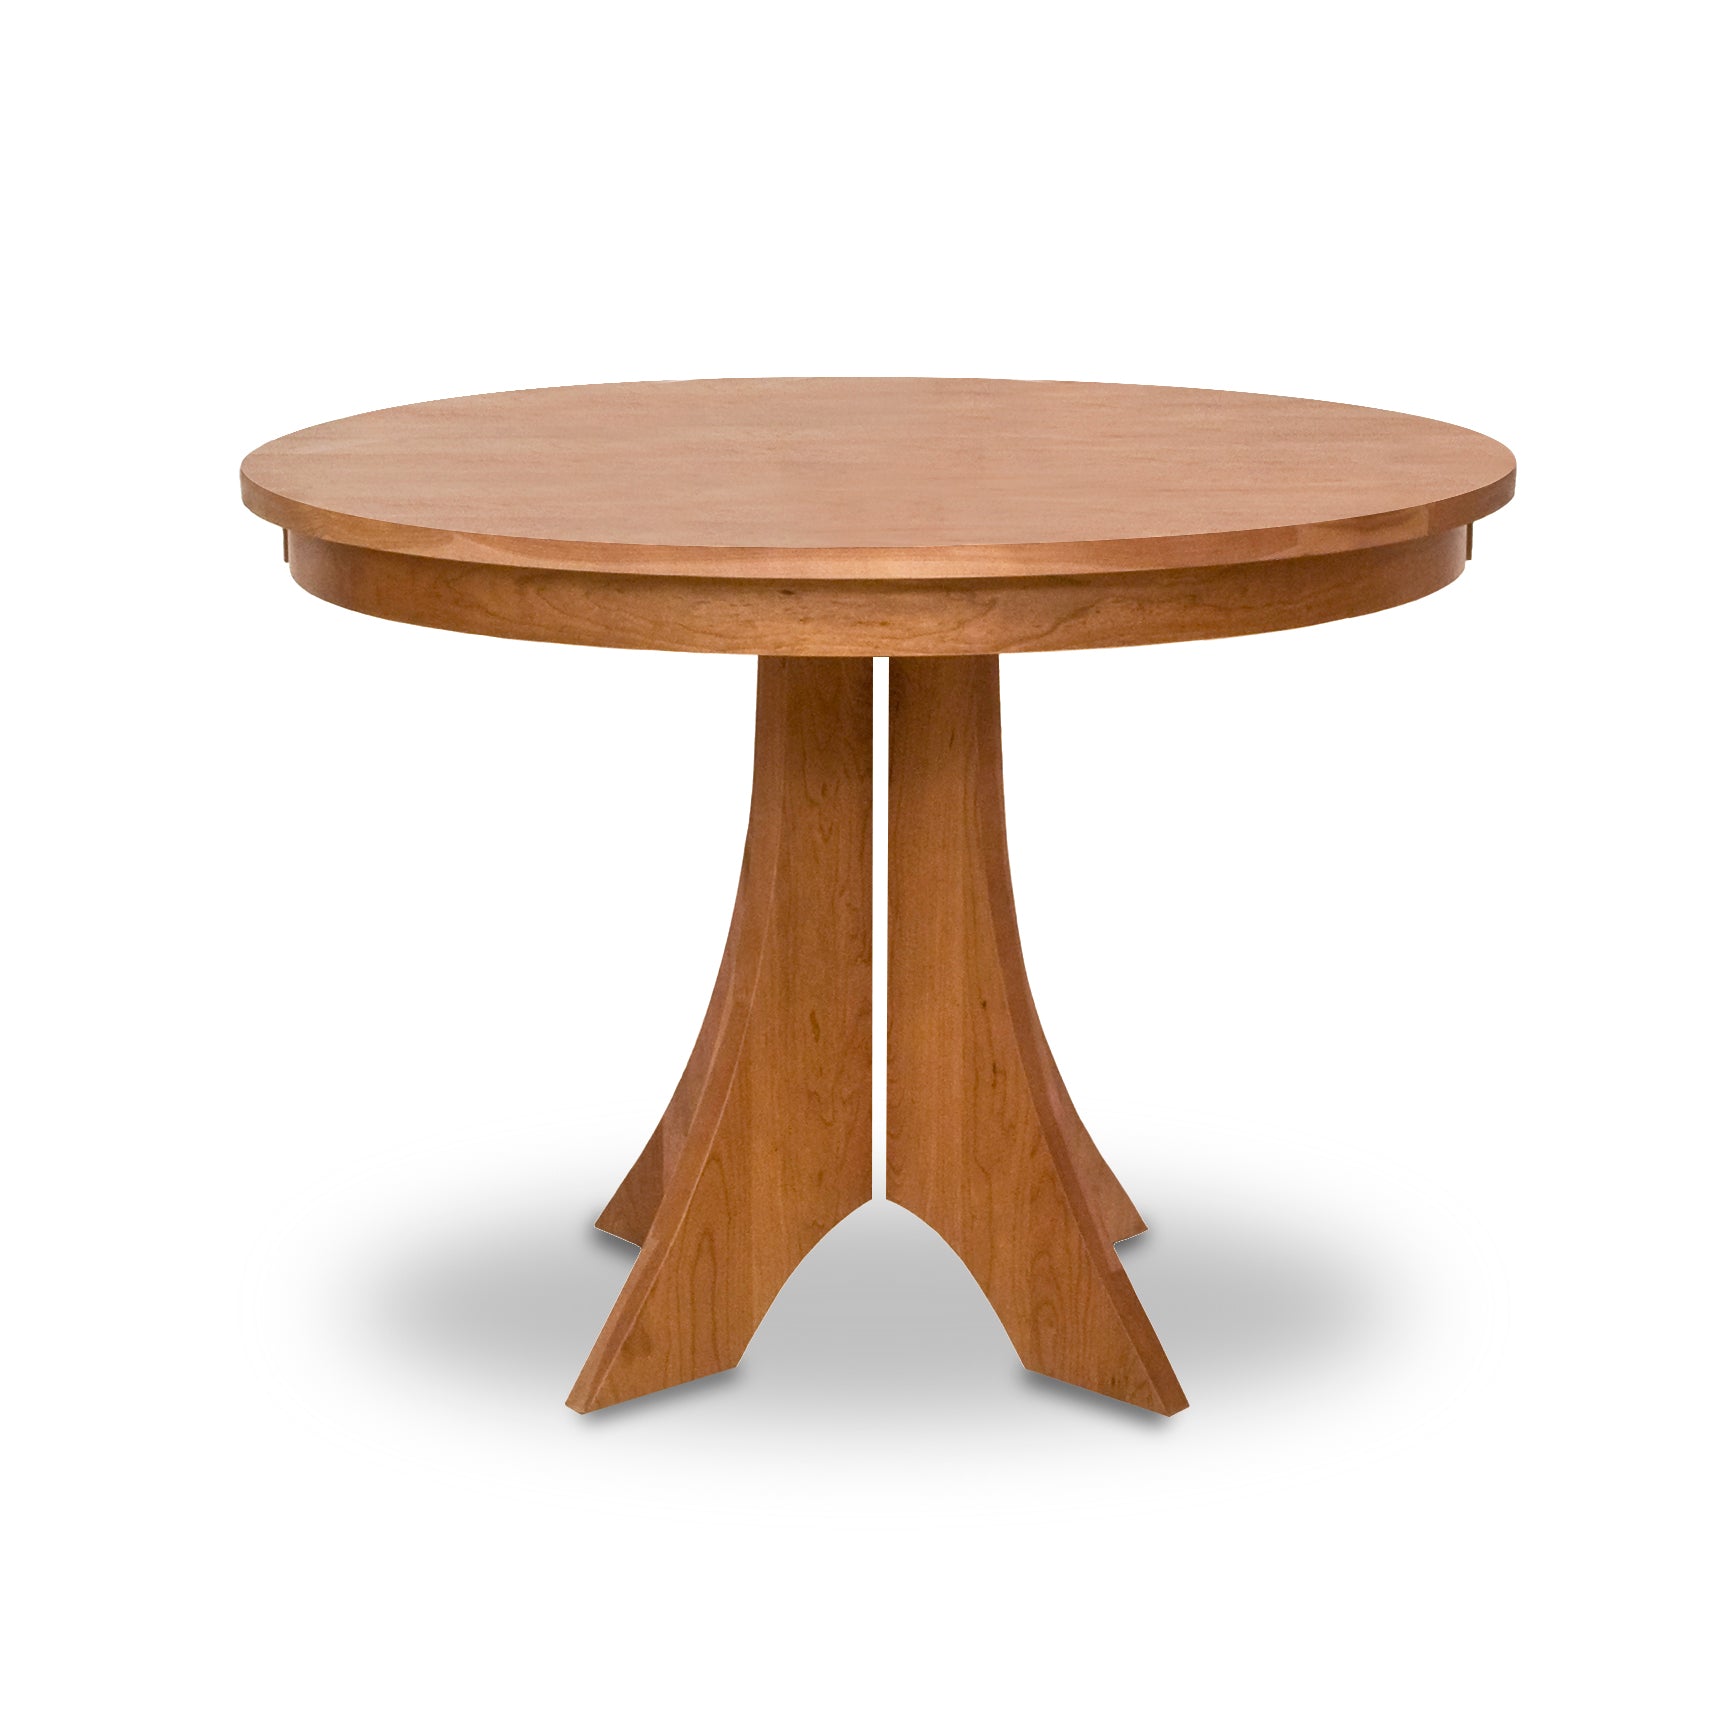 A sturdy Hampton Split Pedestal Round Table with a wooden base by Lyndon Furniture.